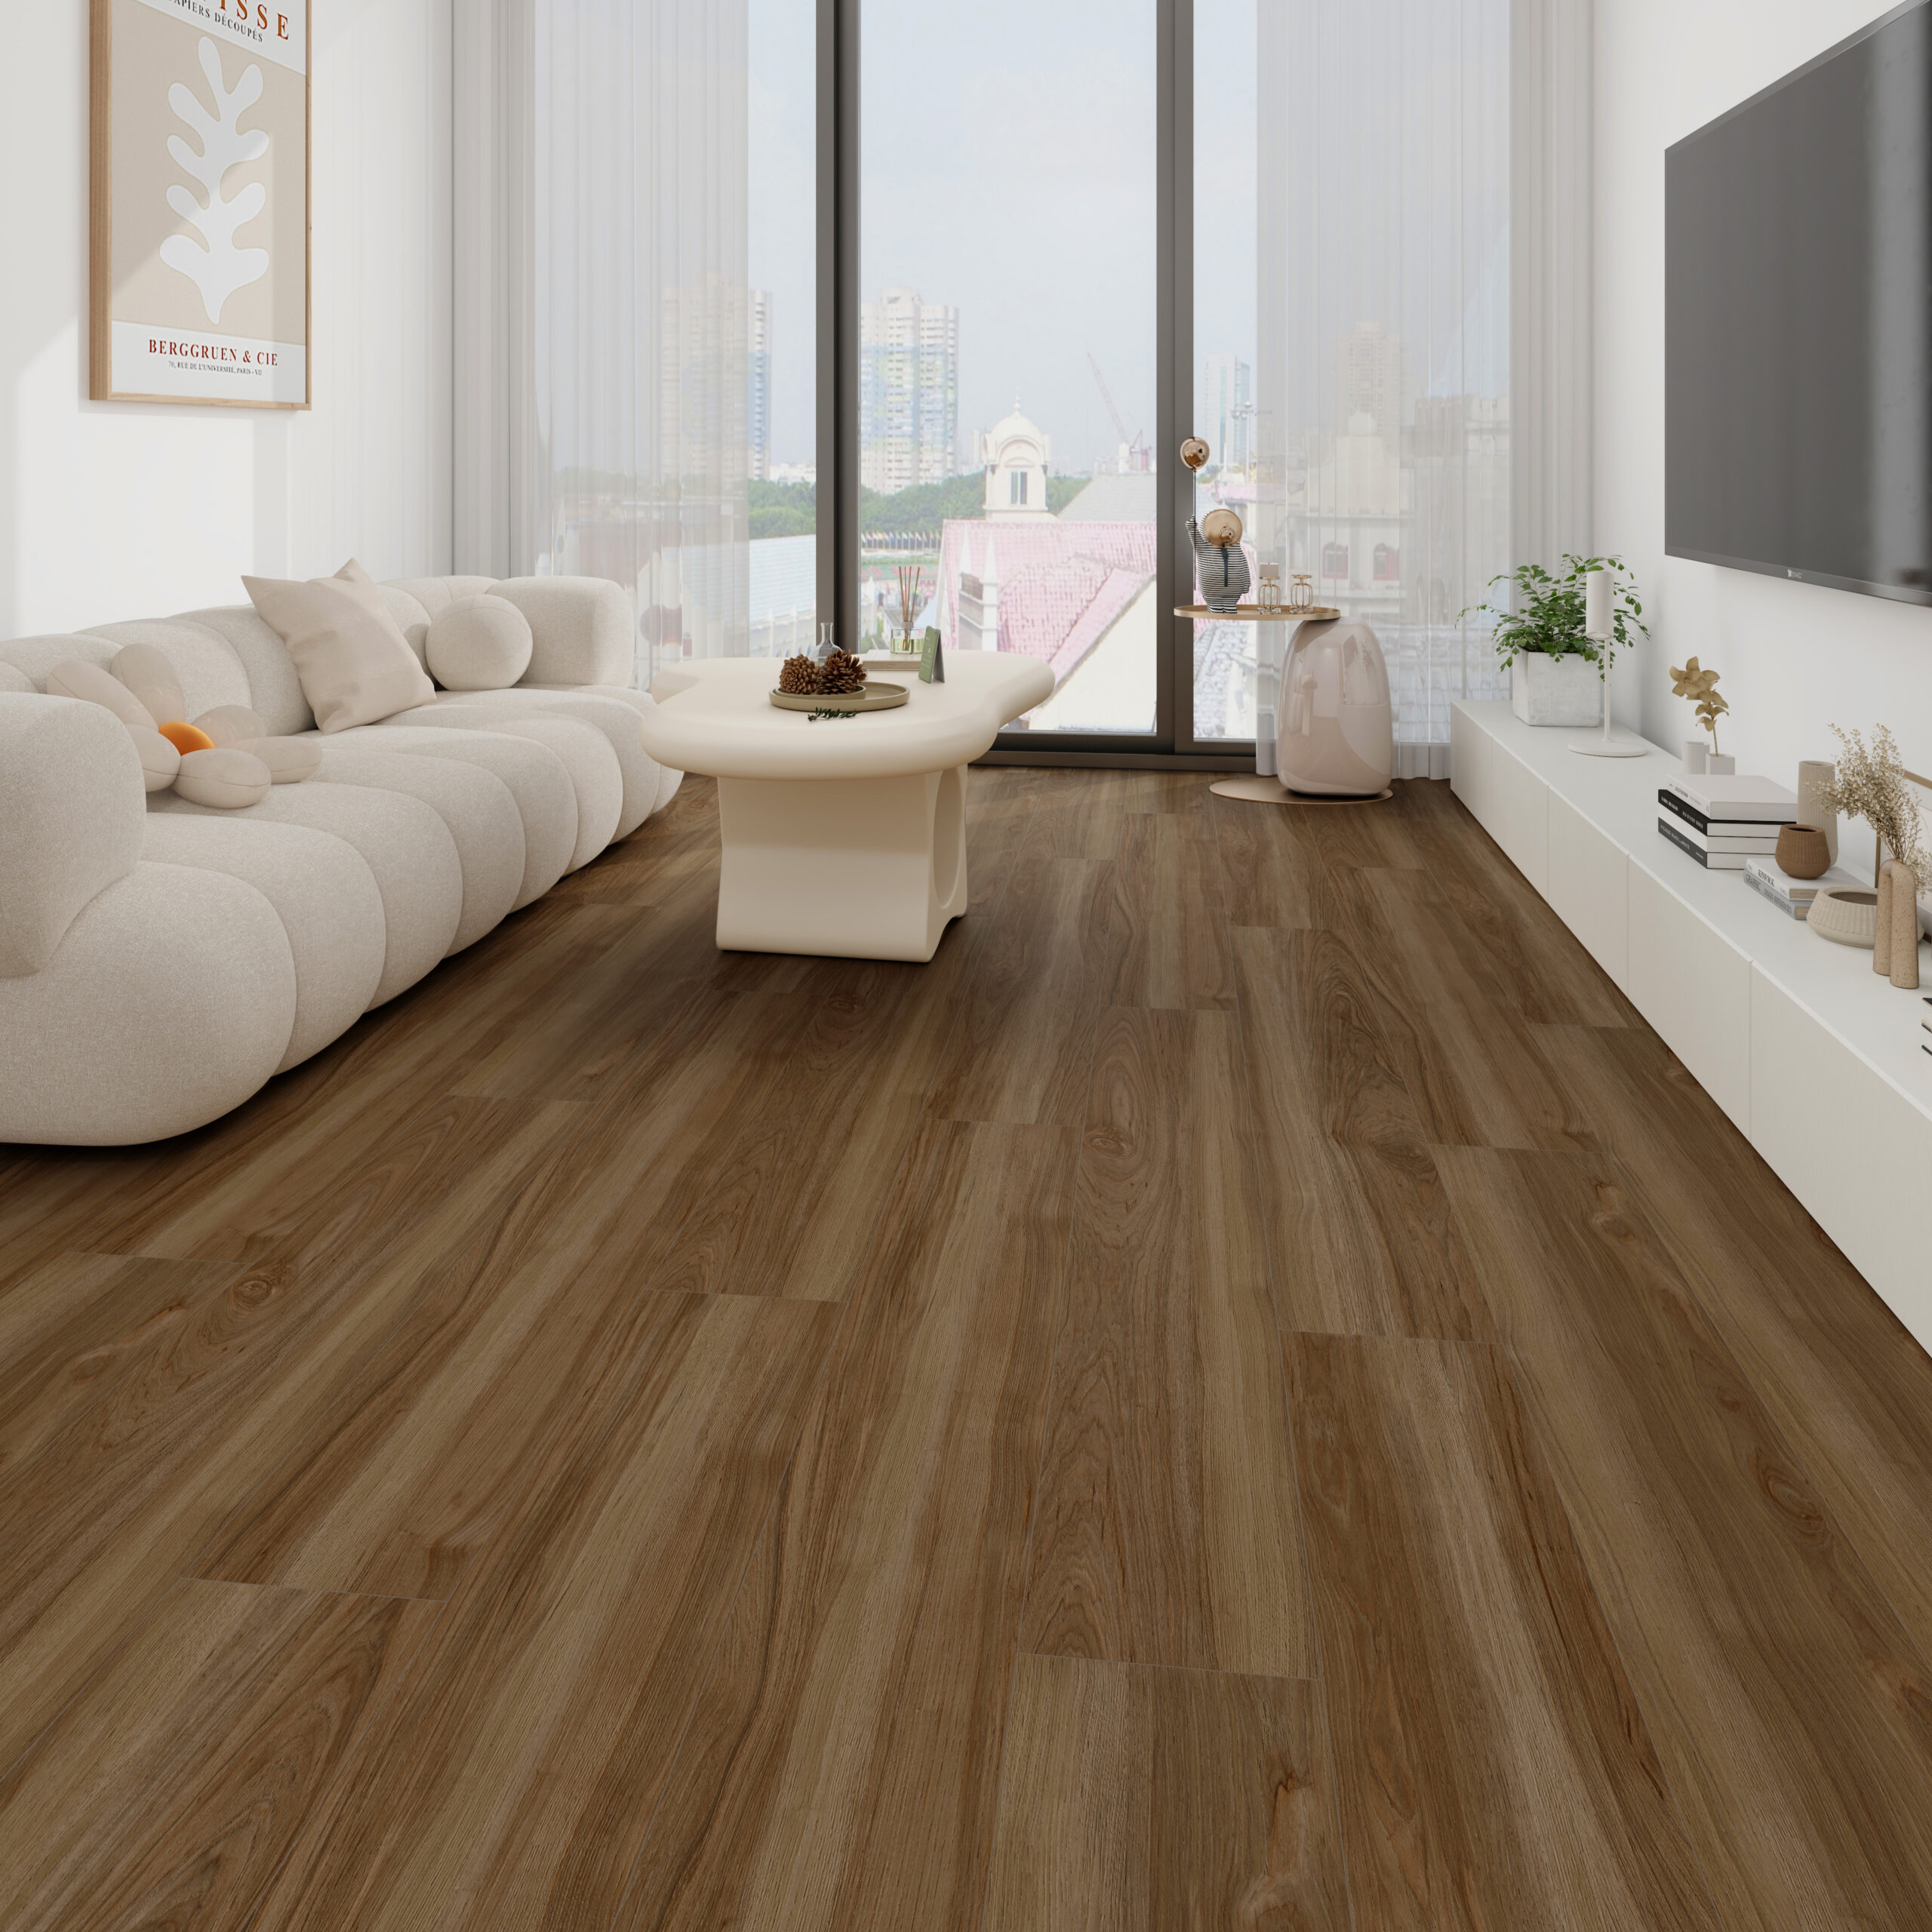 Discover Premium Wholesale Laminate Flooring at USA Wholesale Floors